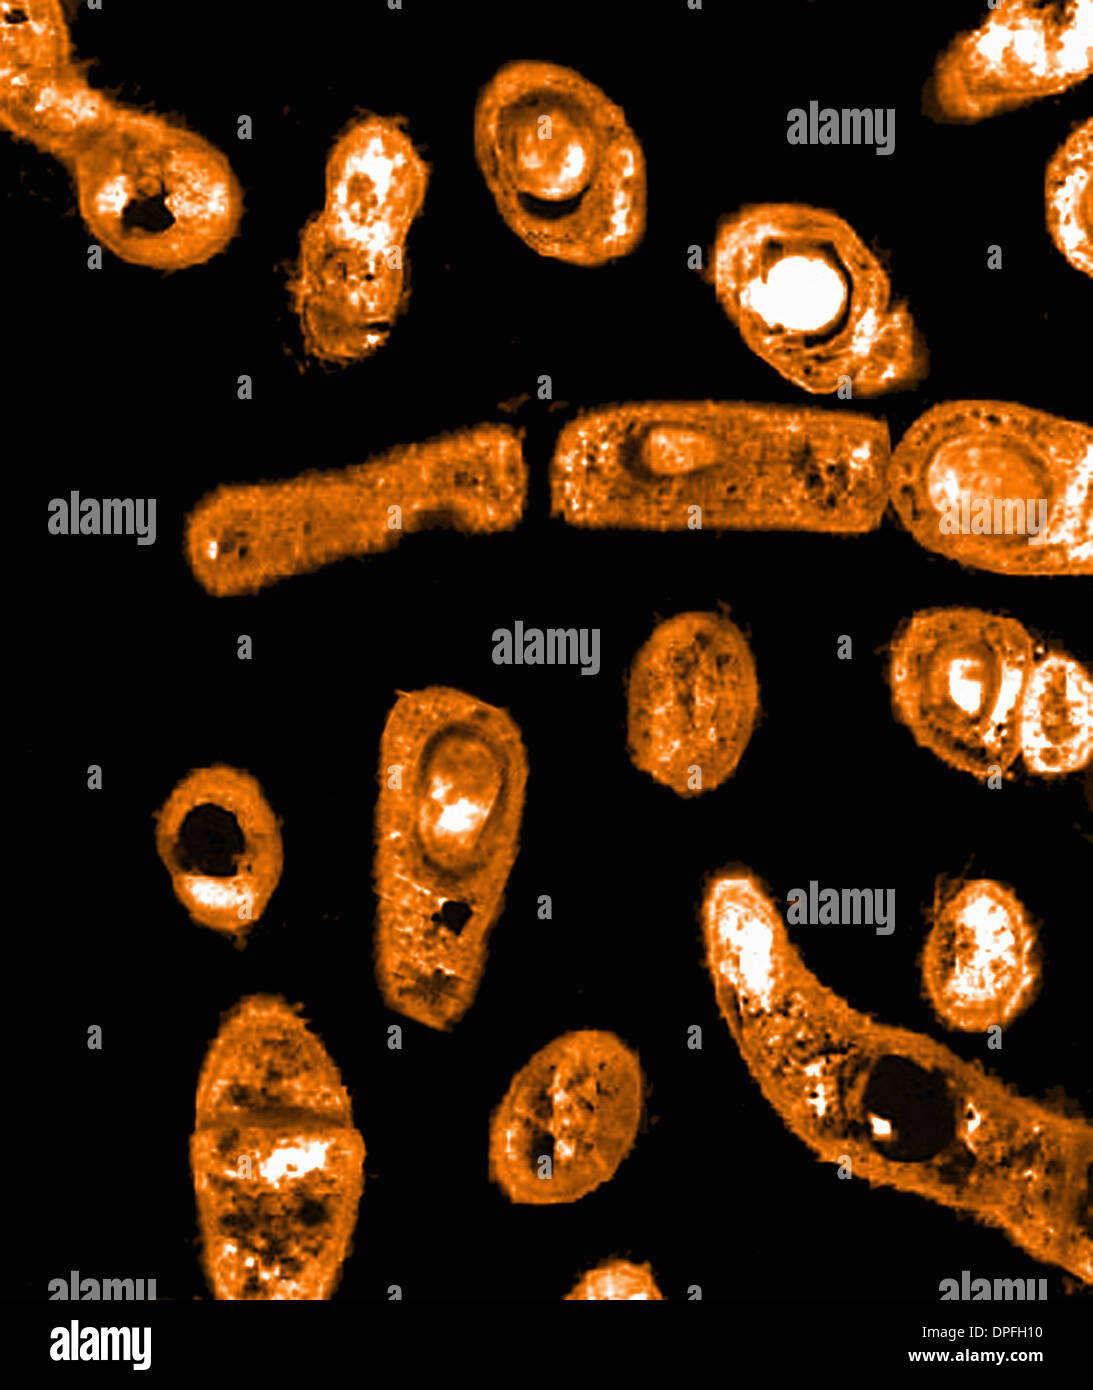 TEM of Anthrax bacteria (Bacillus anthracis) Stock Photo